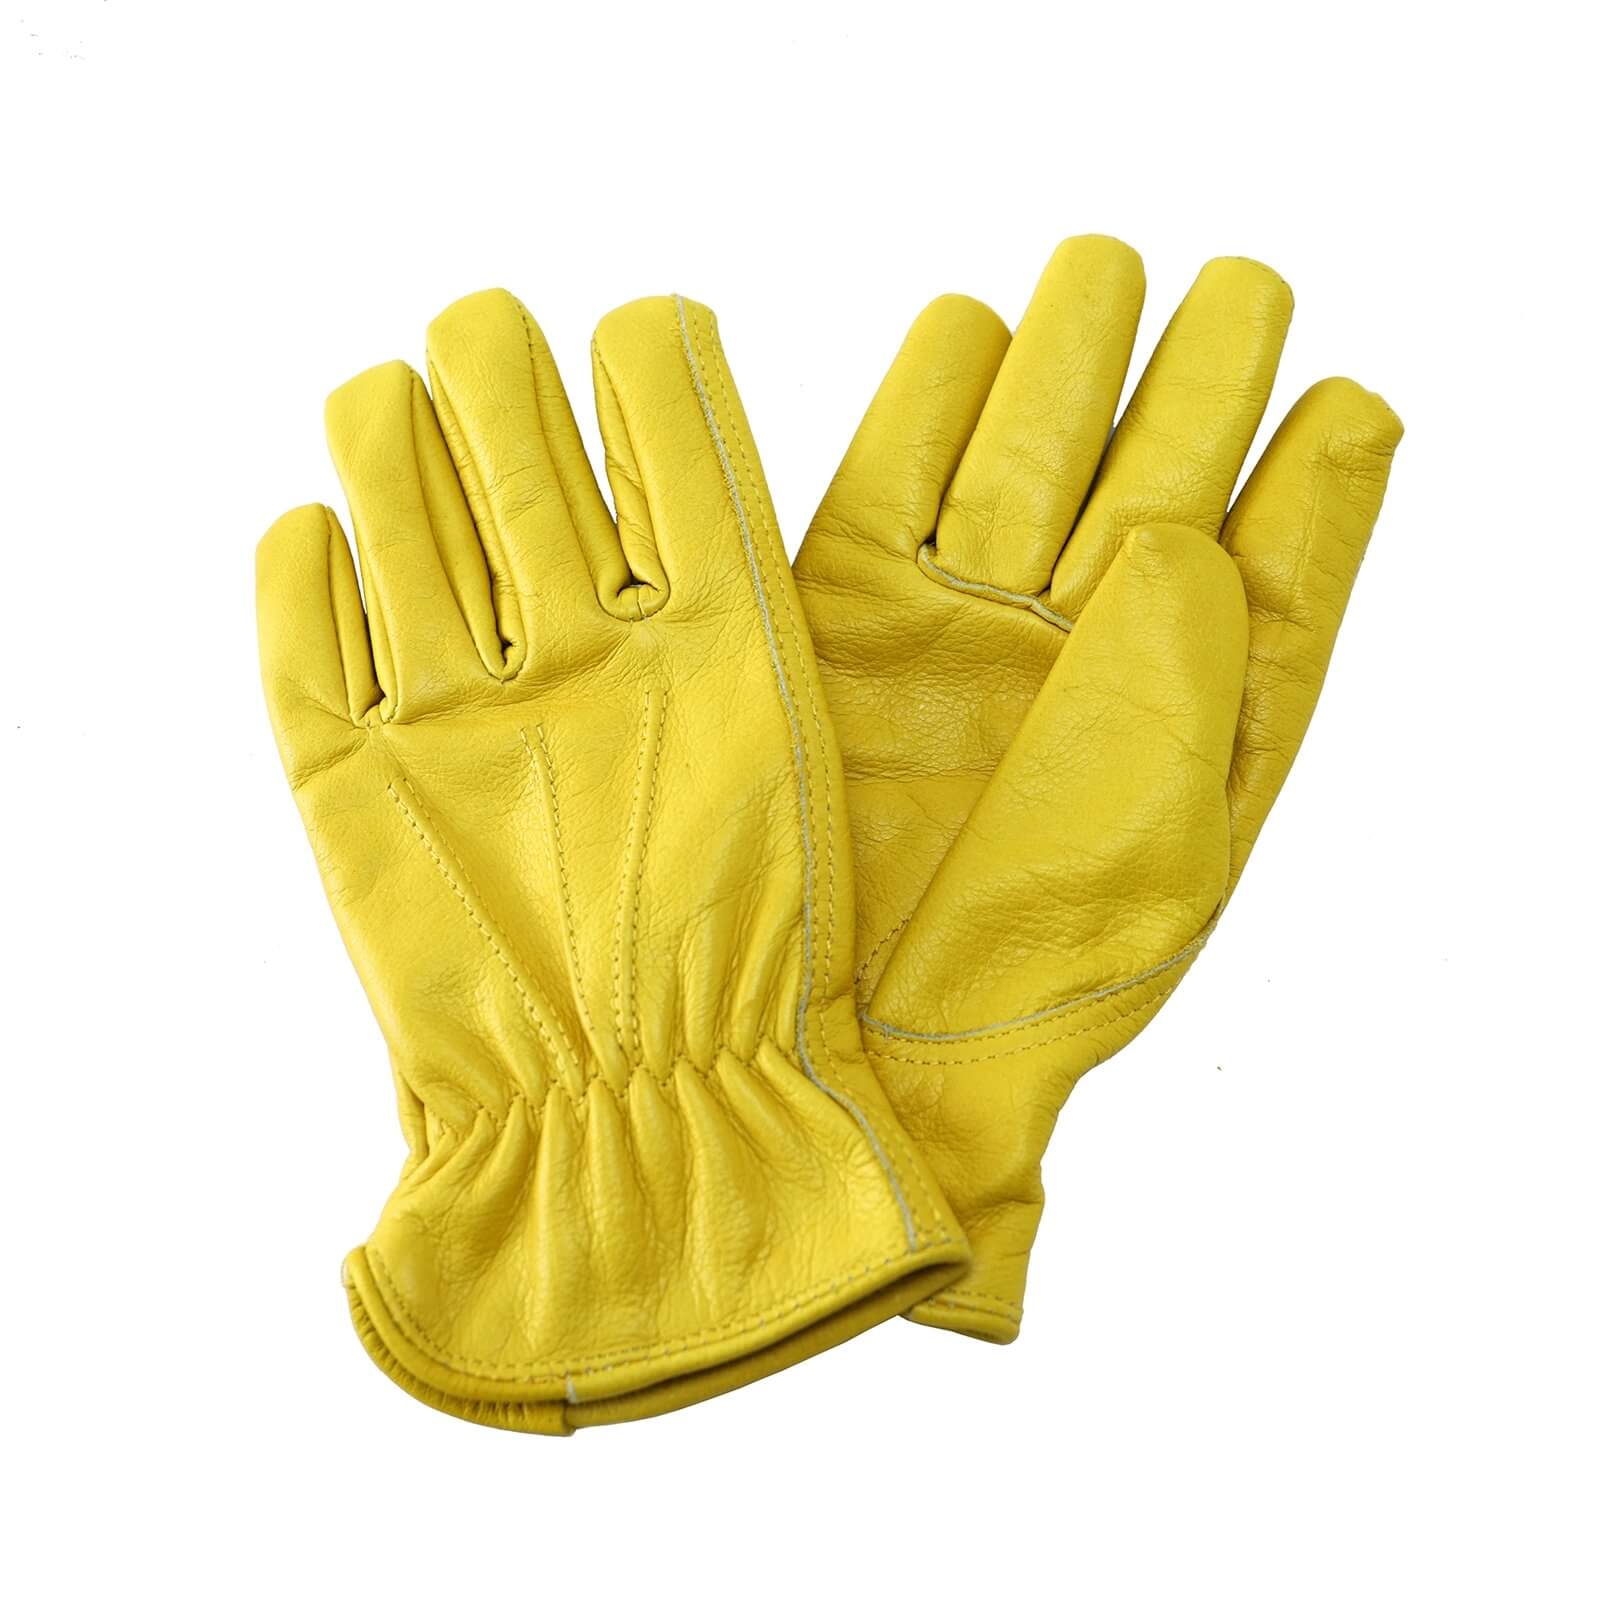 Kent & Stowe Luxury Leather Gloves - Medium